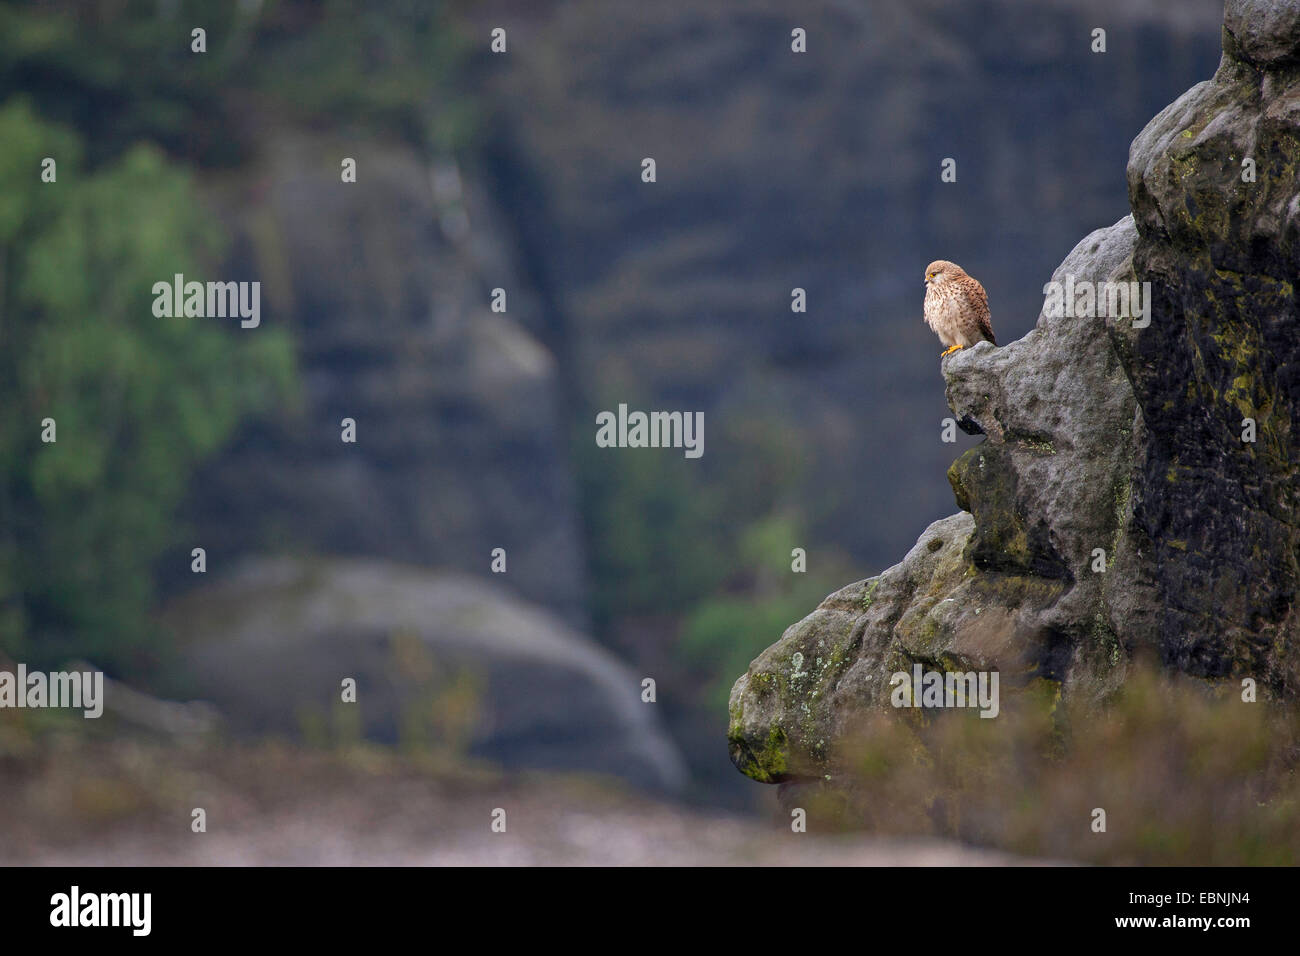 Europäische Turmfalke, Eurasian Kestrel, Old World Turmfalke, Turmfalken (Falco Tinnunculus), auf einem Felsen in ihrem Lebensraum, Deutschland Stockfoto